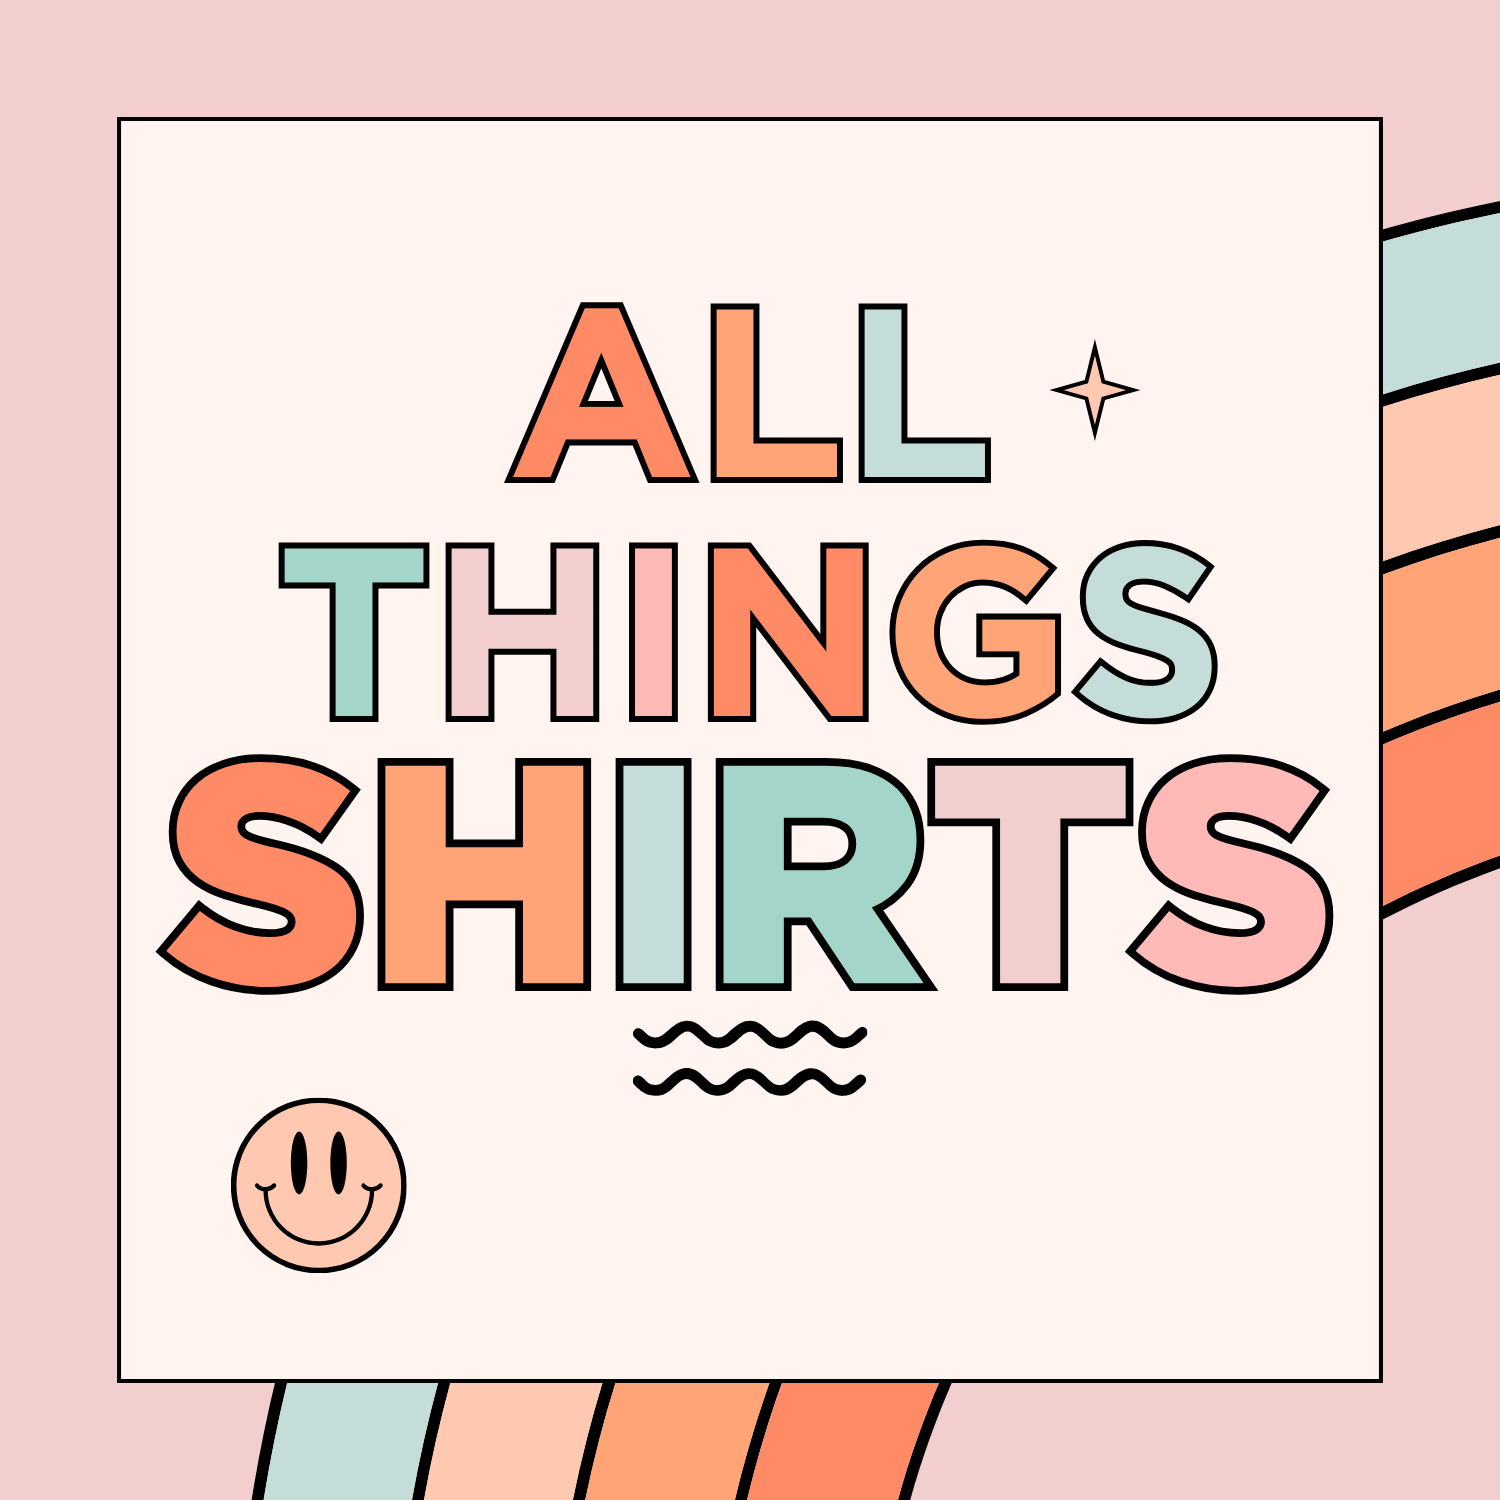 All Things Shirts